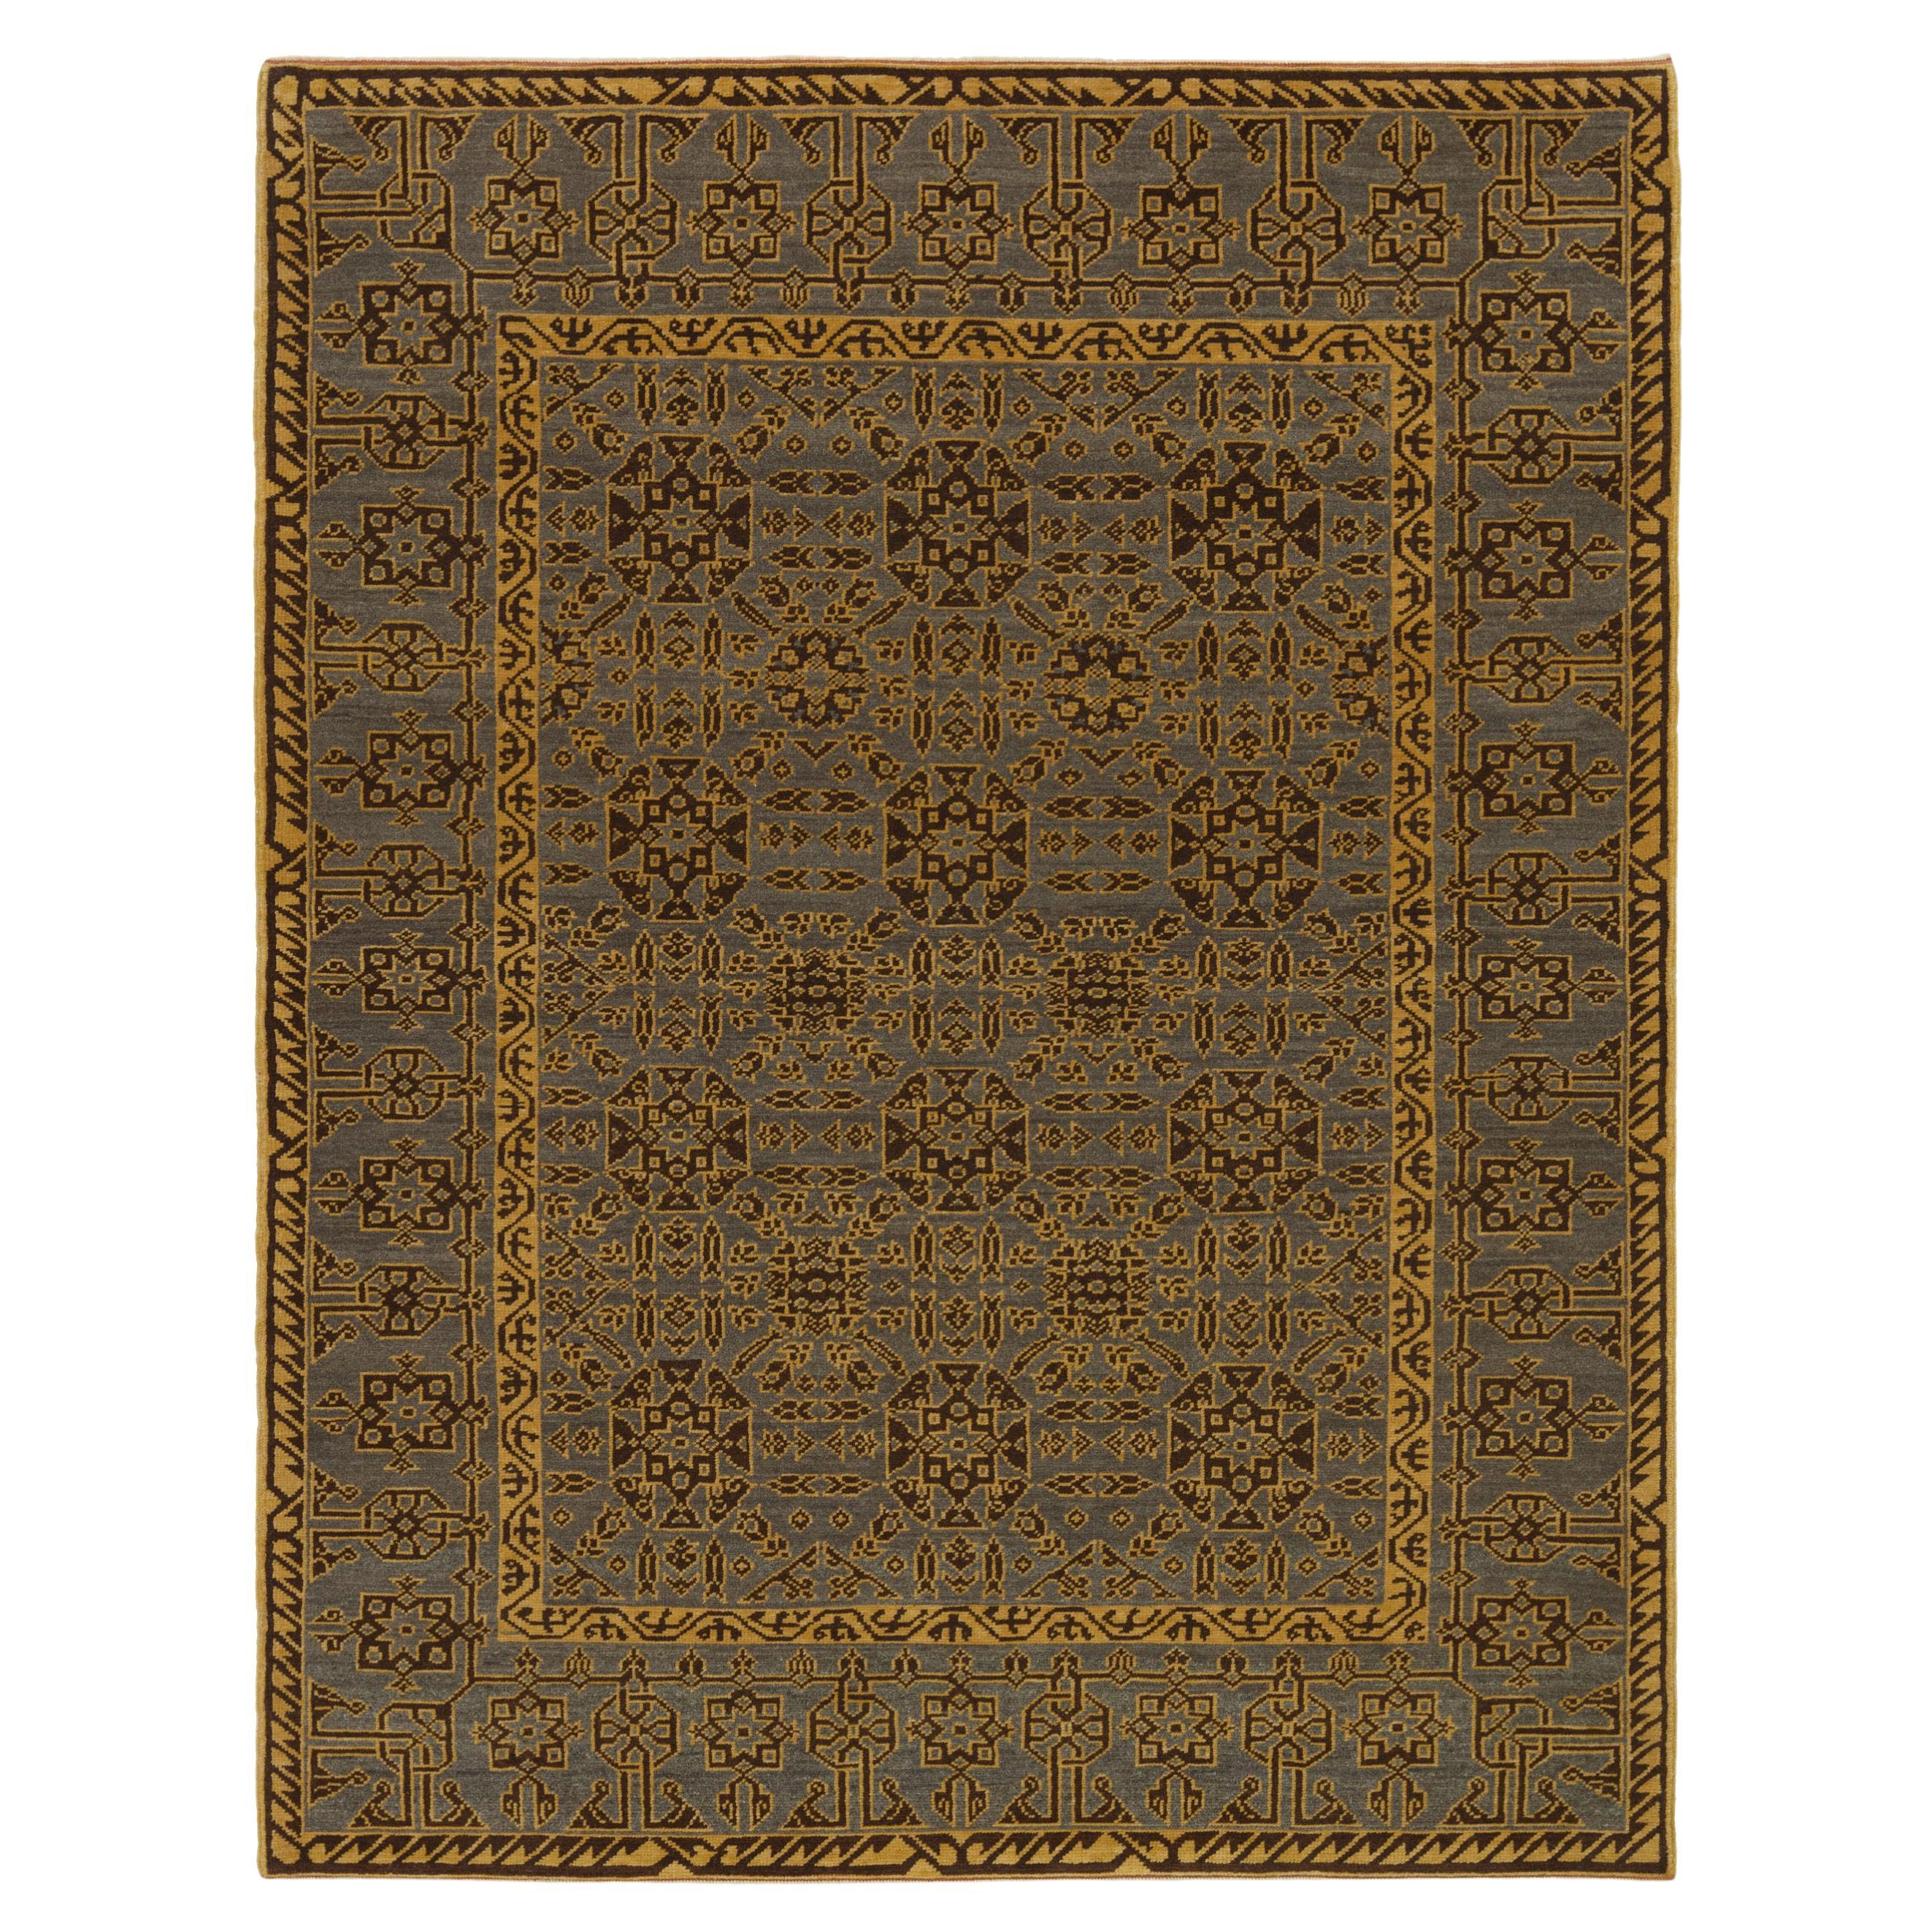 Ararat Rugs The Divrigi Ulu Mosque Carpet Anatolian Revival Rug, Natural Dye